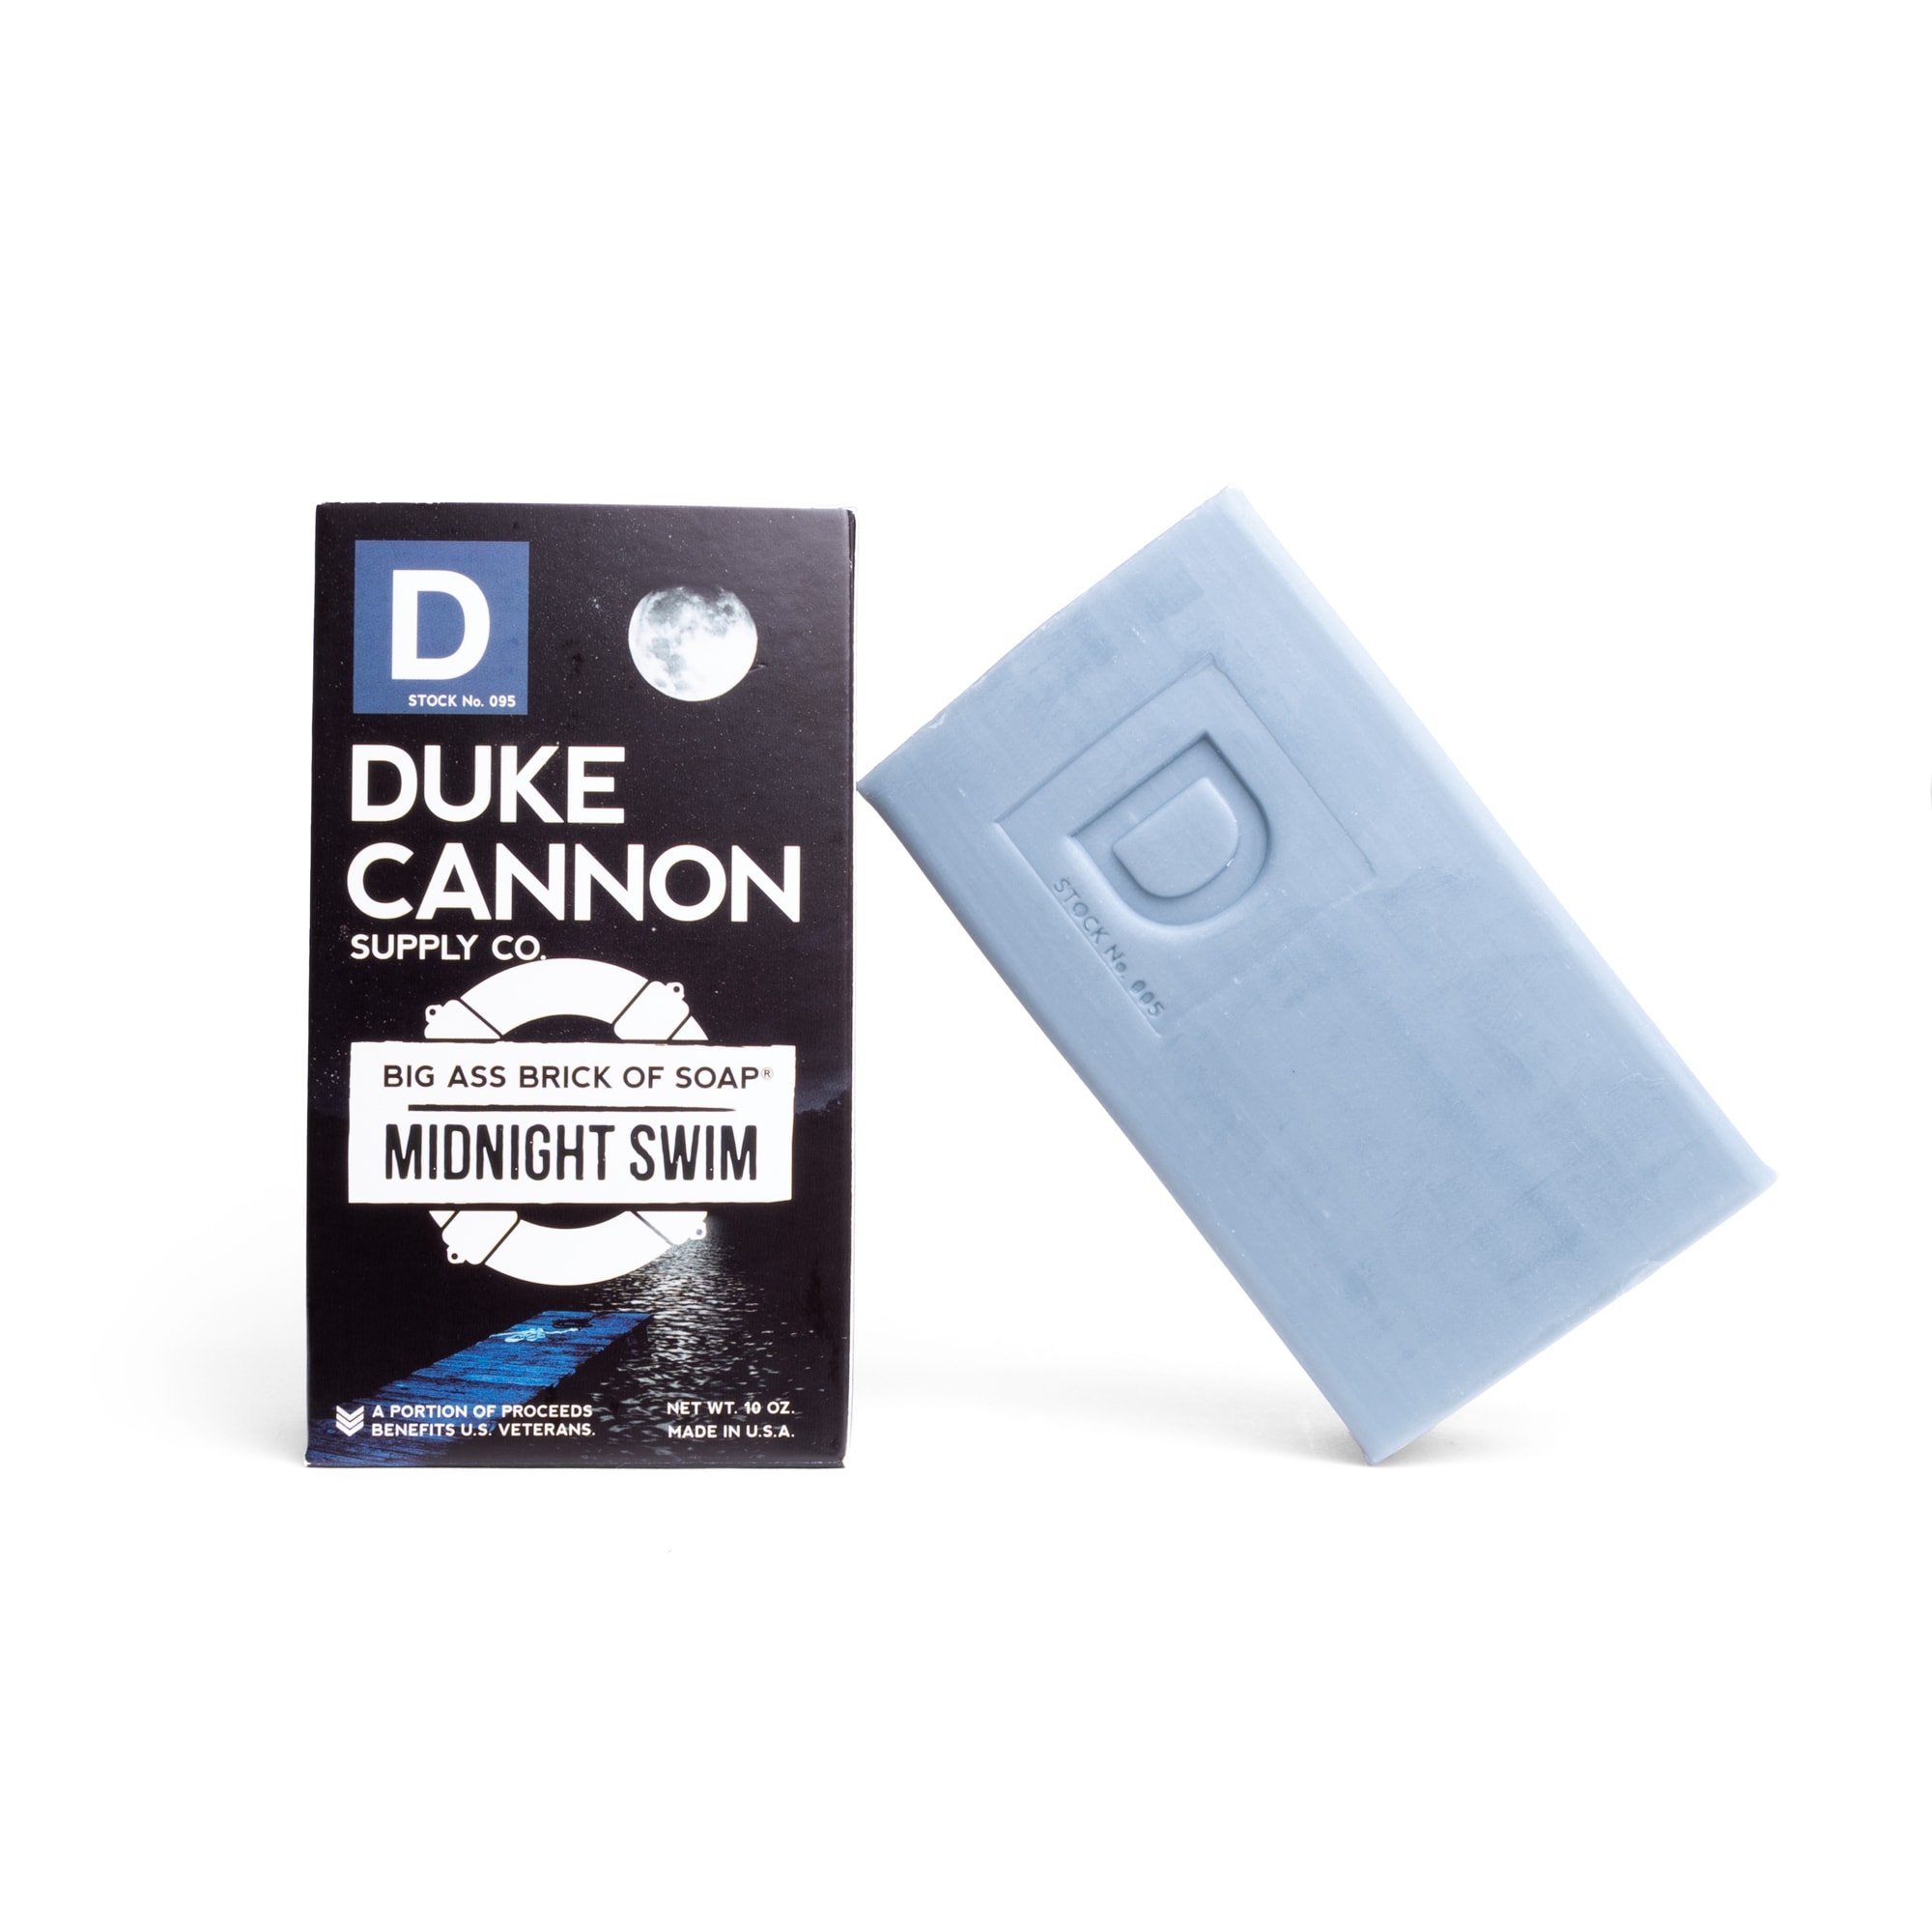 Duke Cannon - Big Ass Brick of Soap (Leaf & Leather)